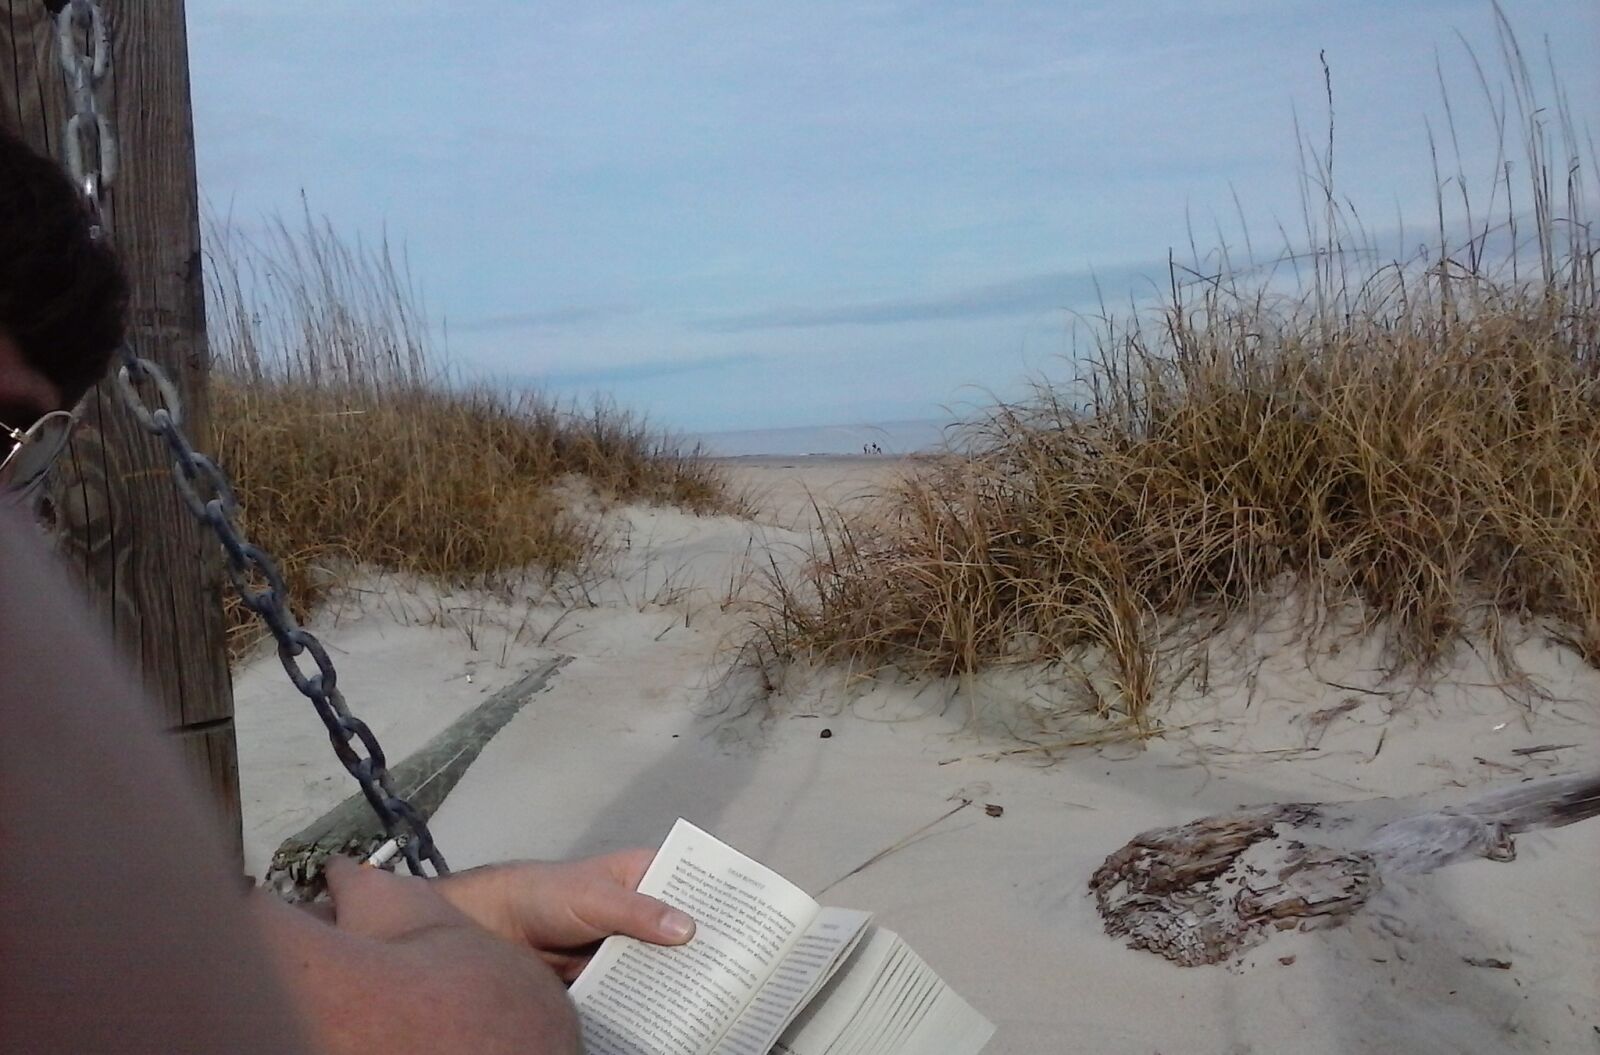 LG Optimus Fuel sample photo. Beach, book, dune, landscape photography